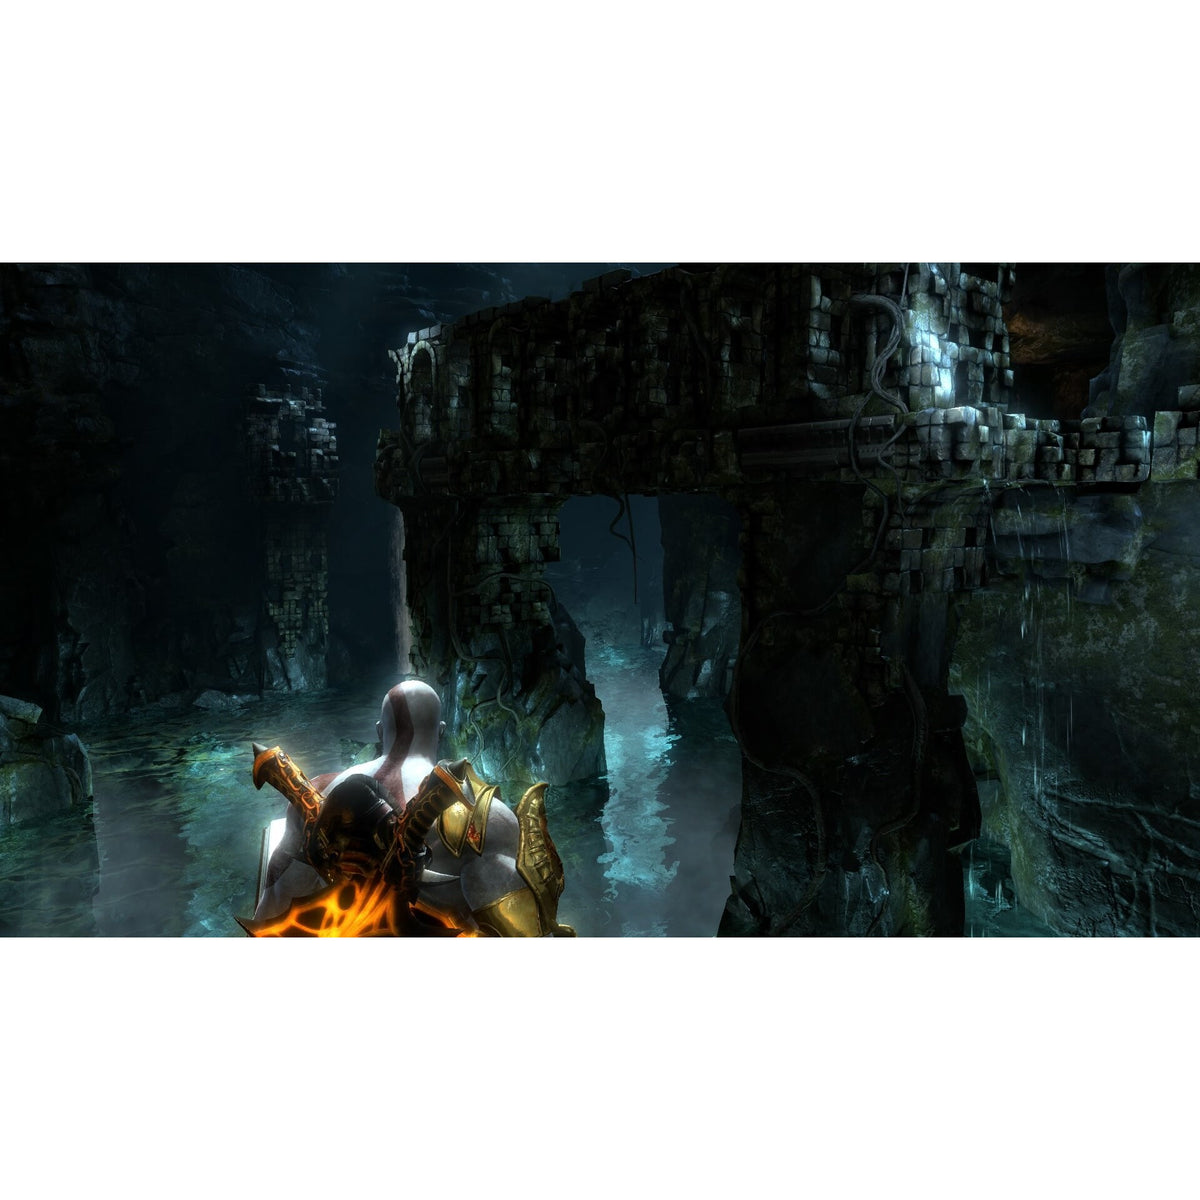 God of War III - Remastered (PS719993193)